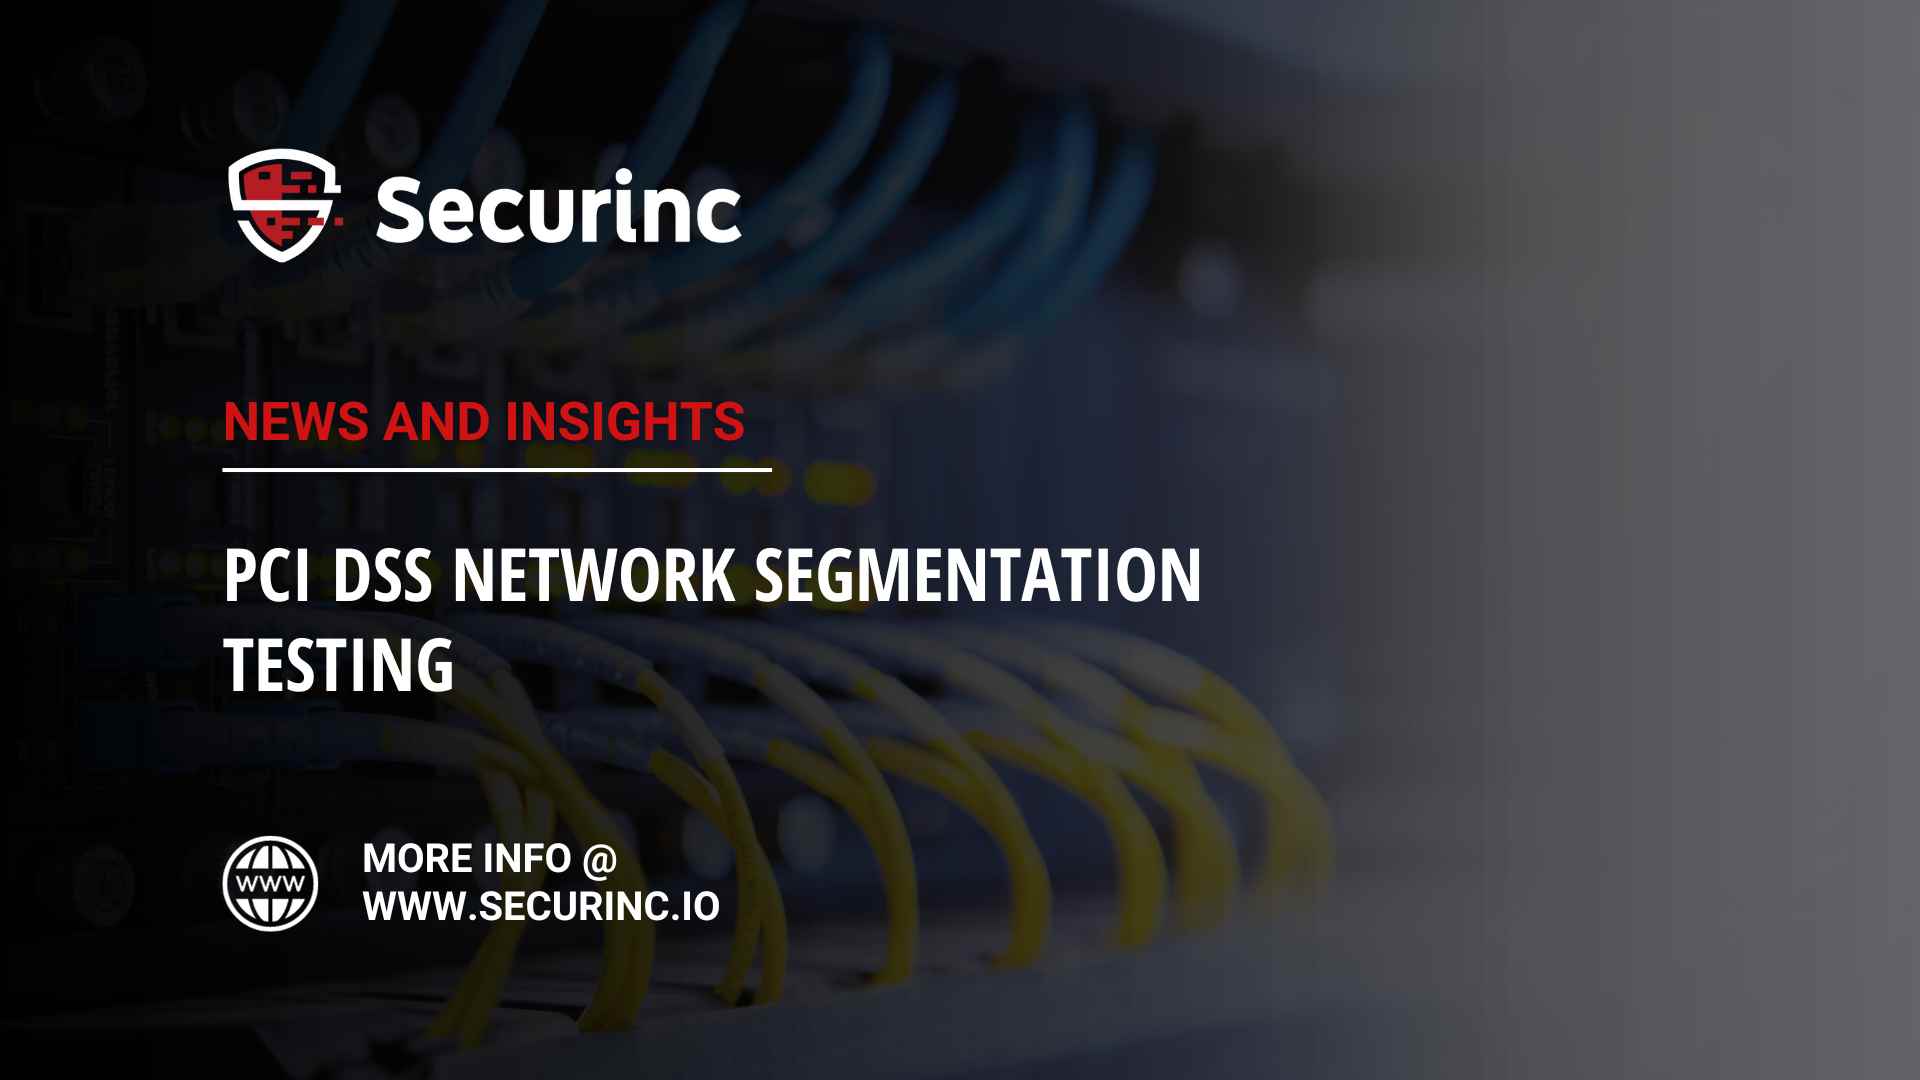 PCI DSS Network Segmentation Testing